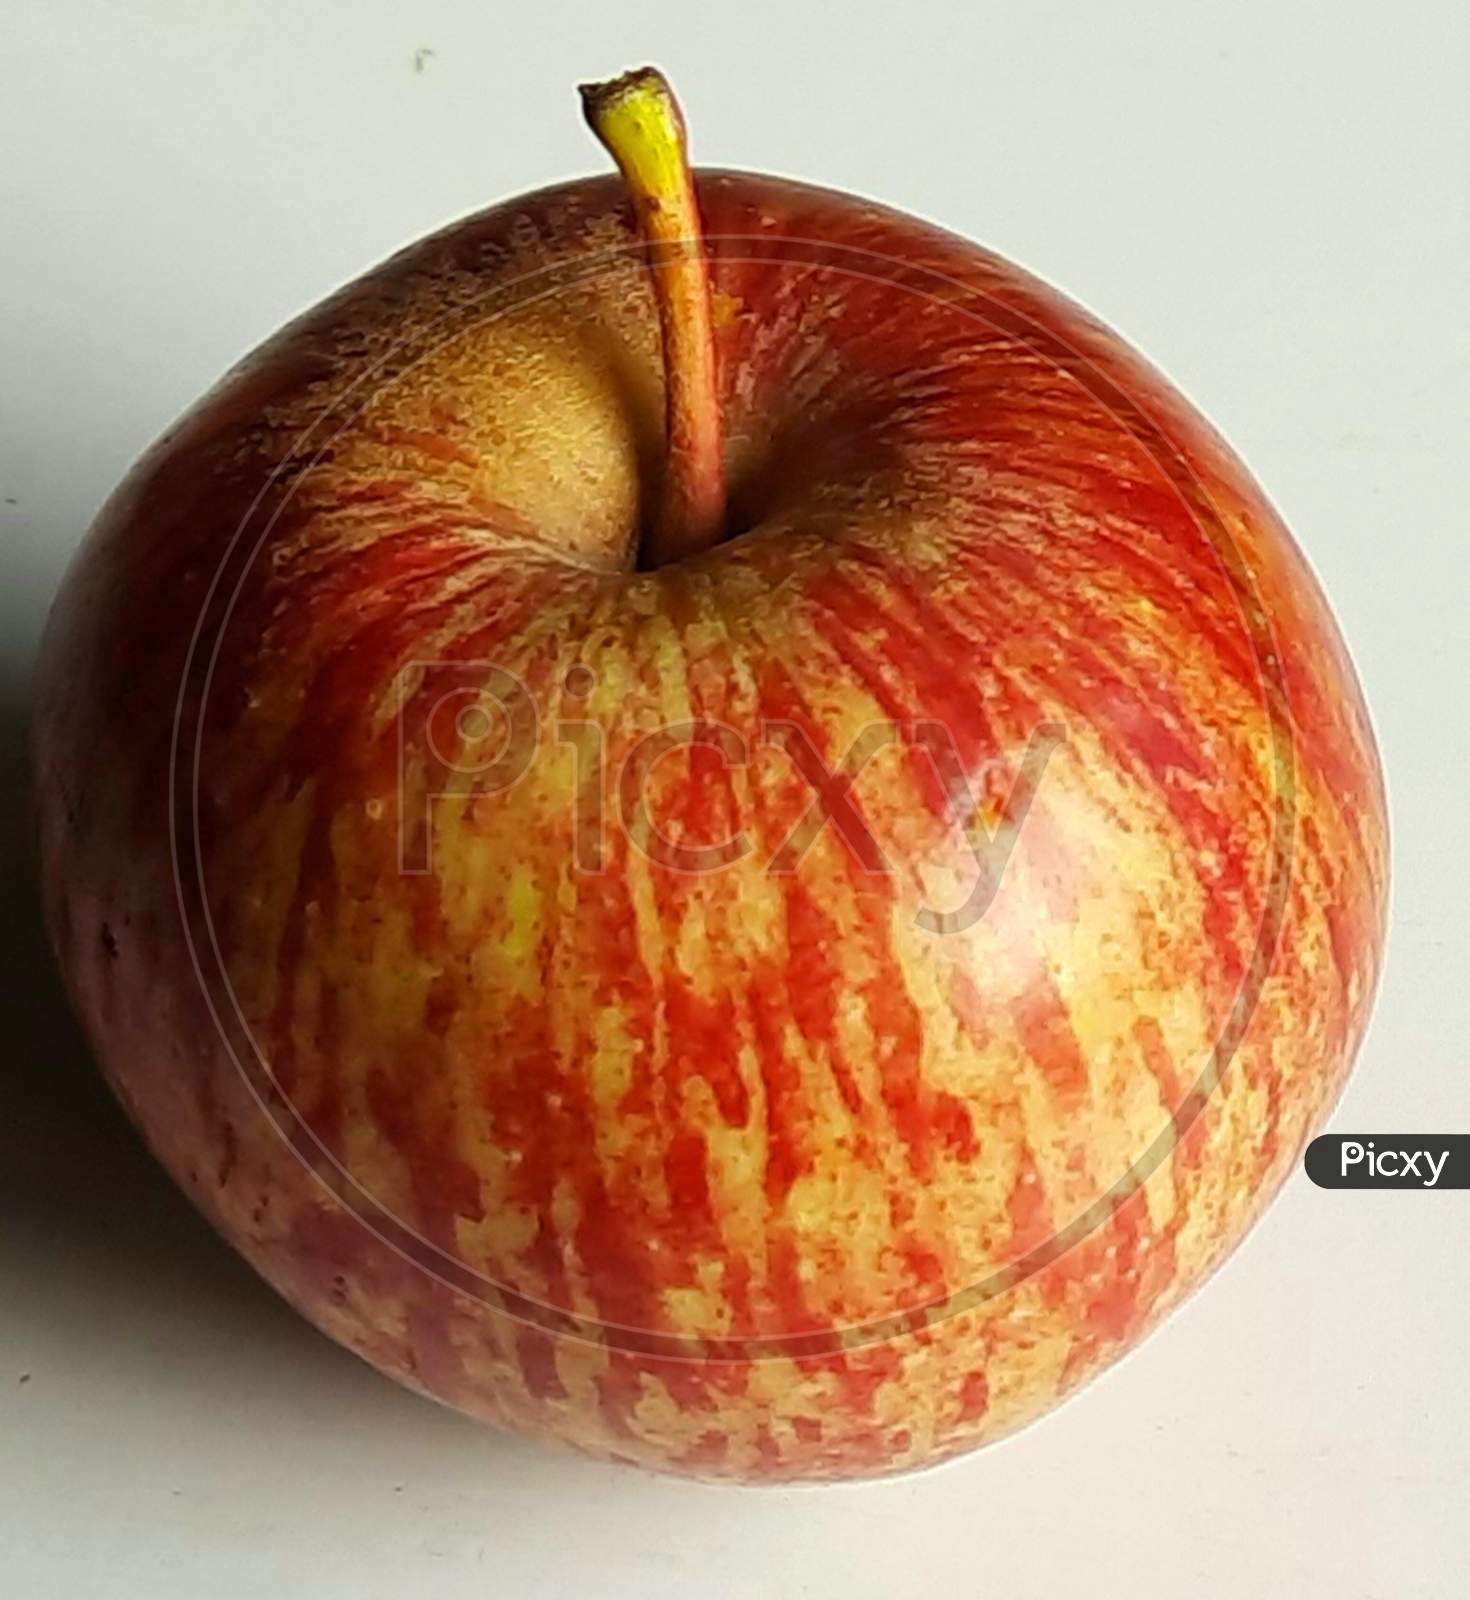 One apple image